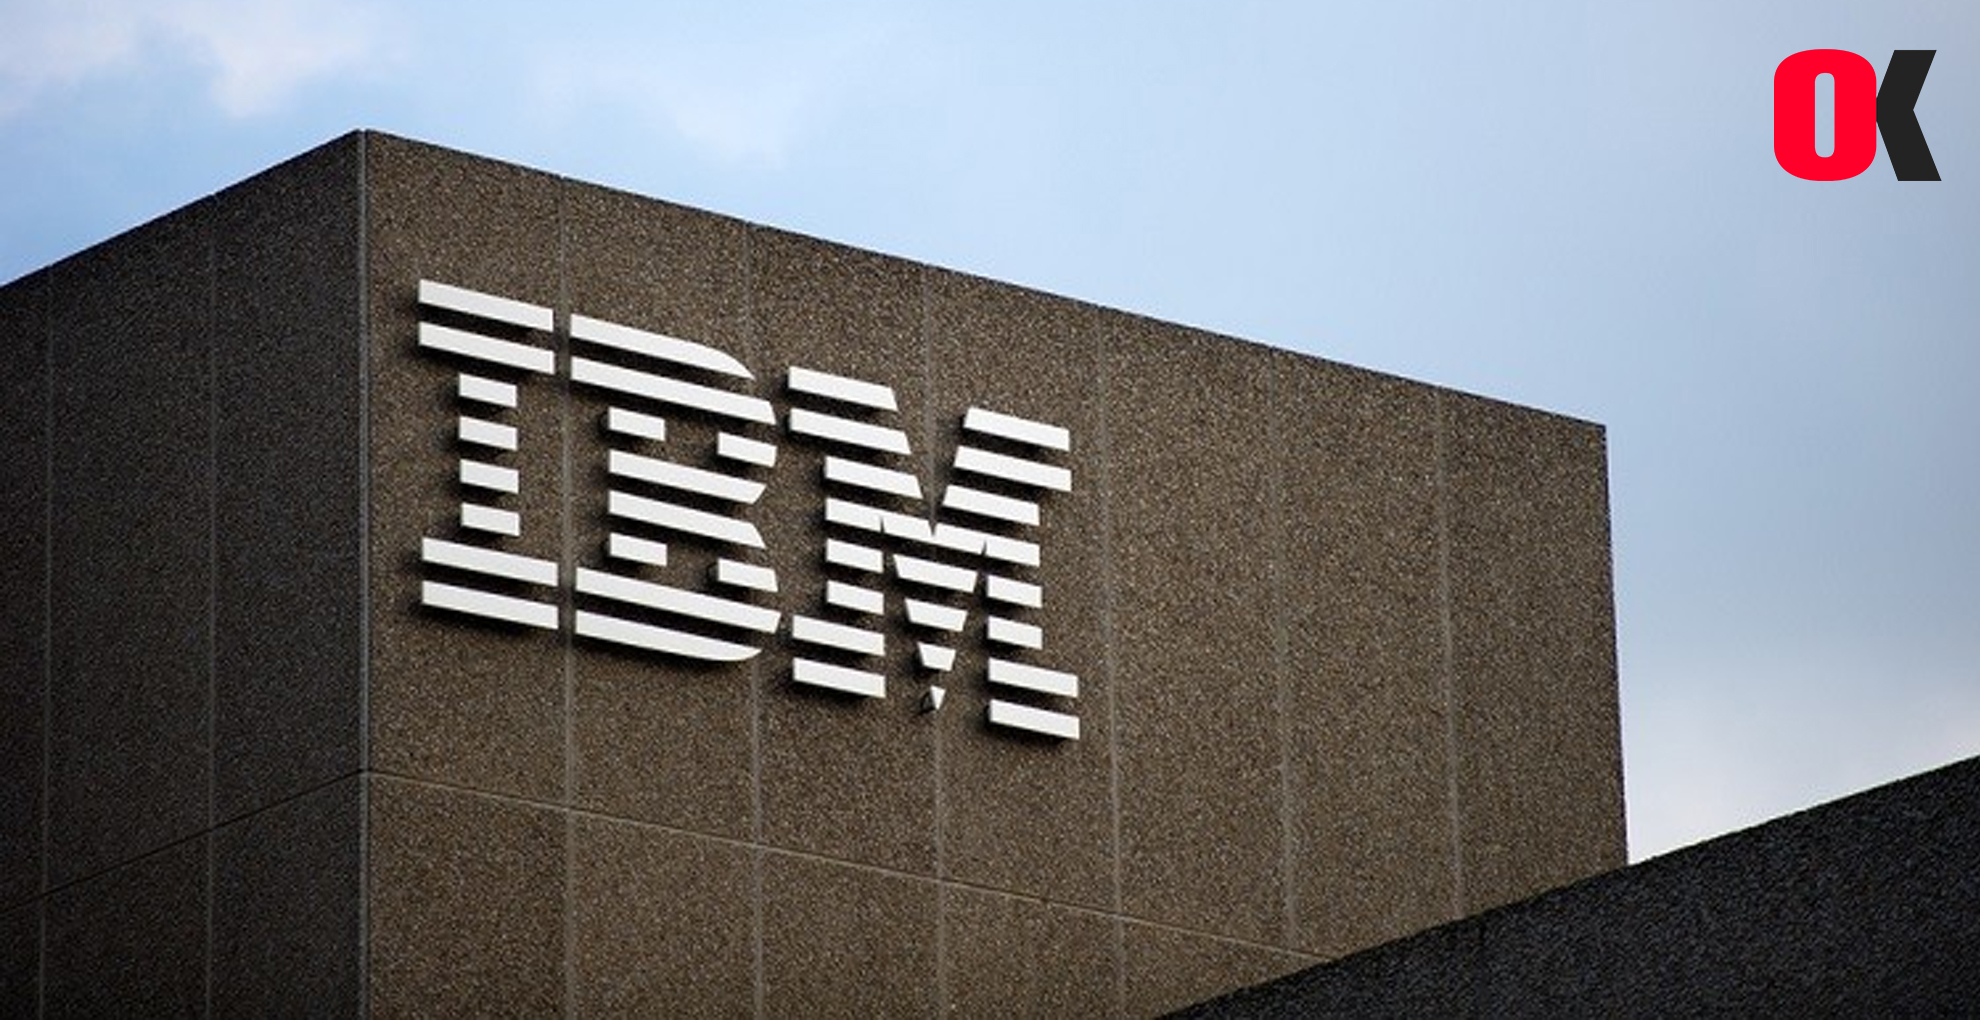 IBM steps up digital